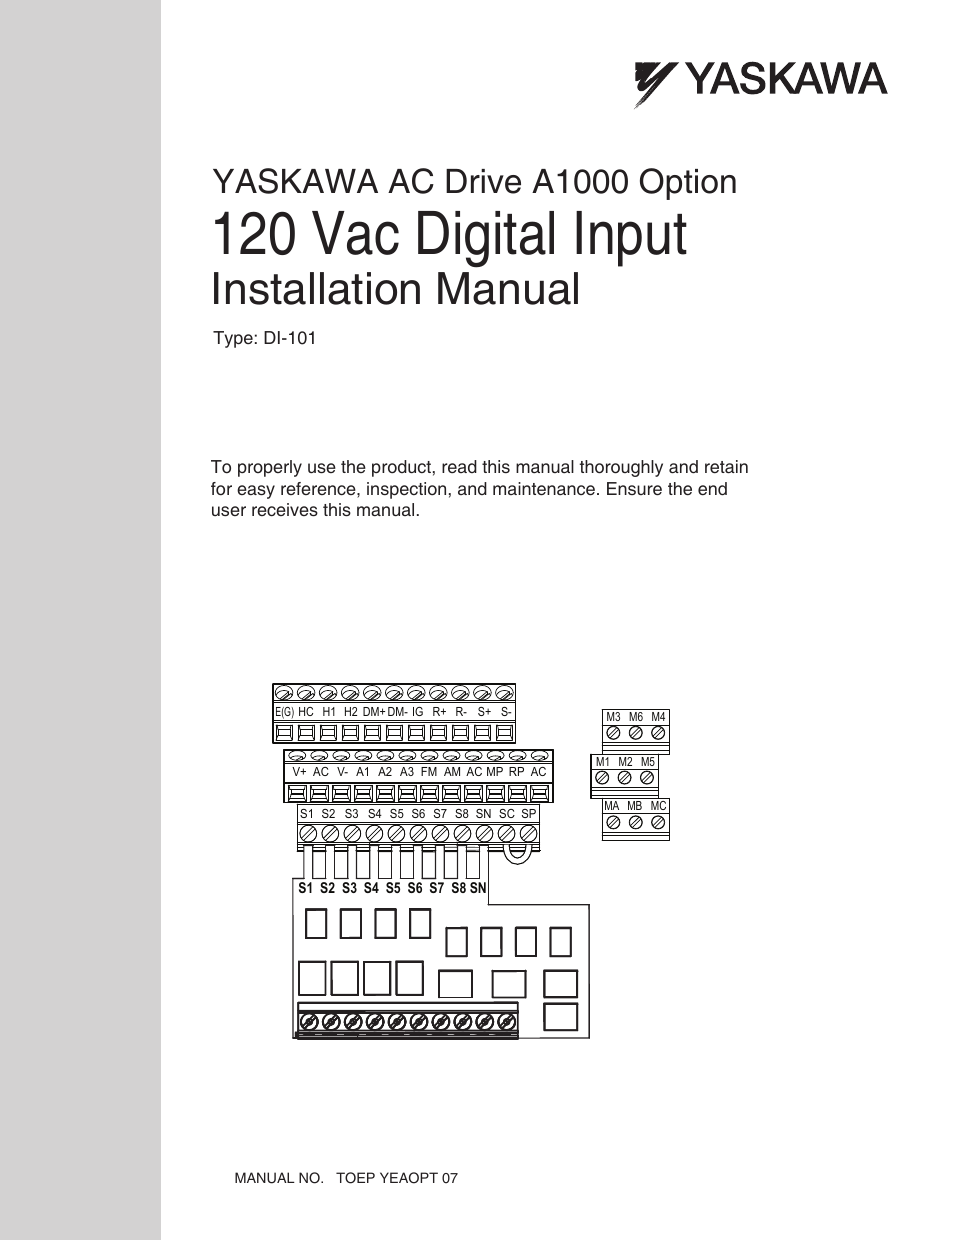 A1000 Option DI-101 120 Vac Digital Input Option